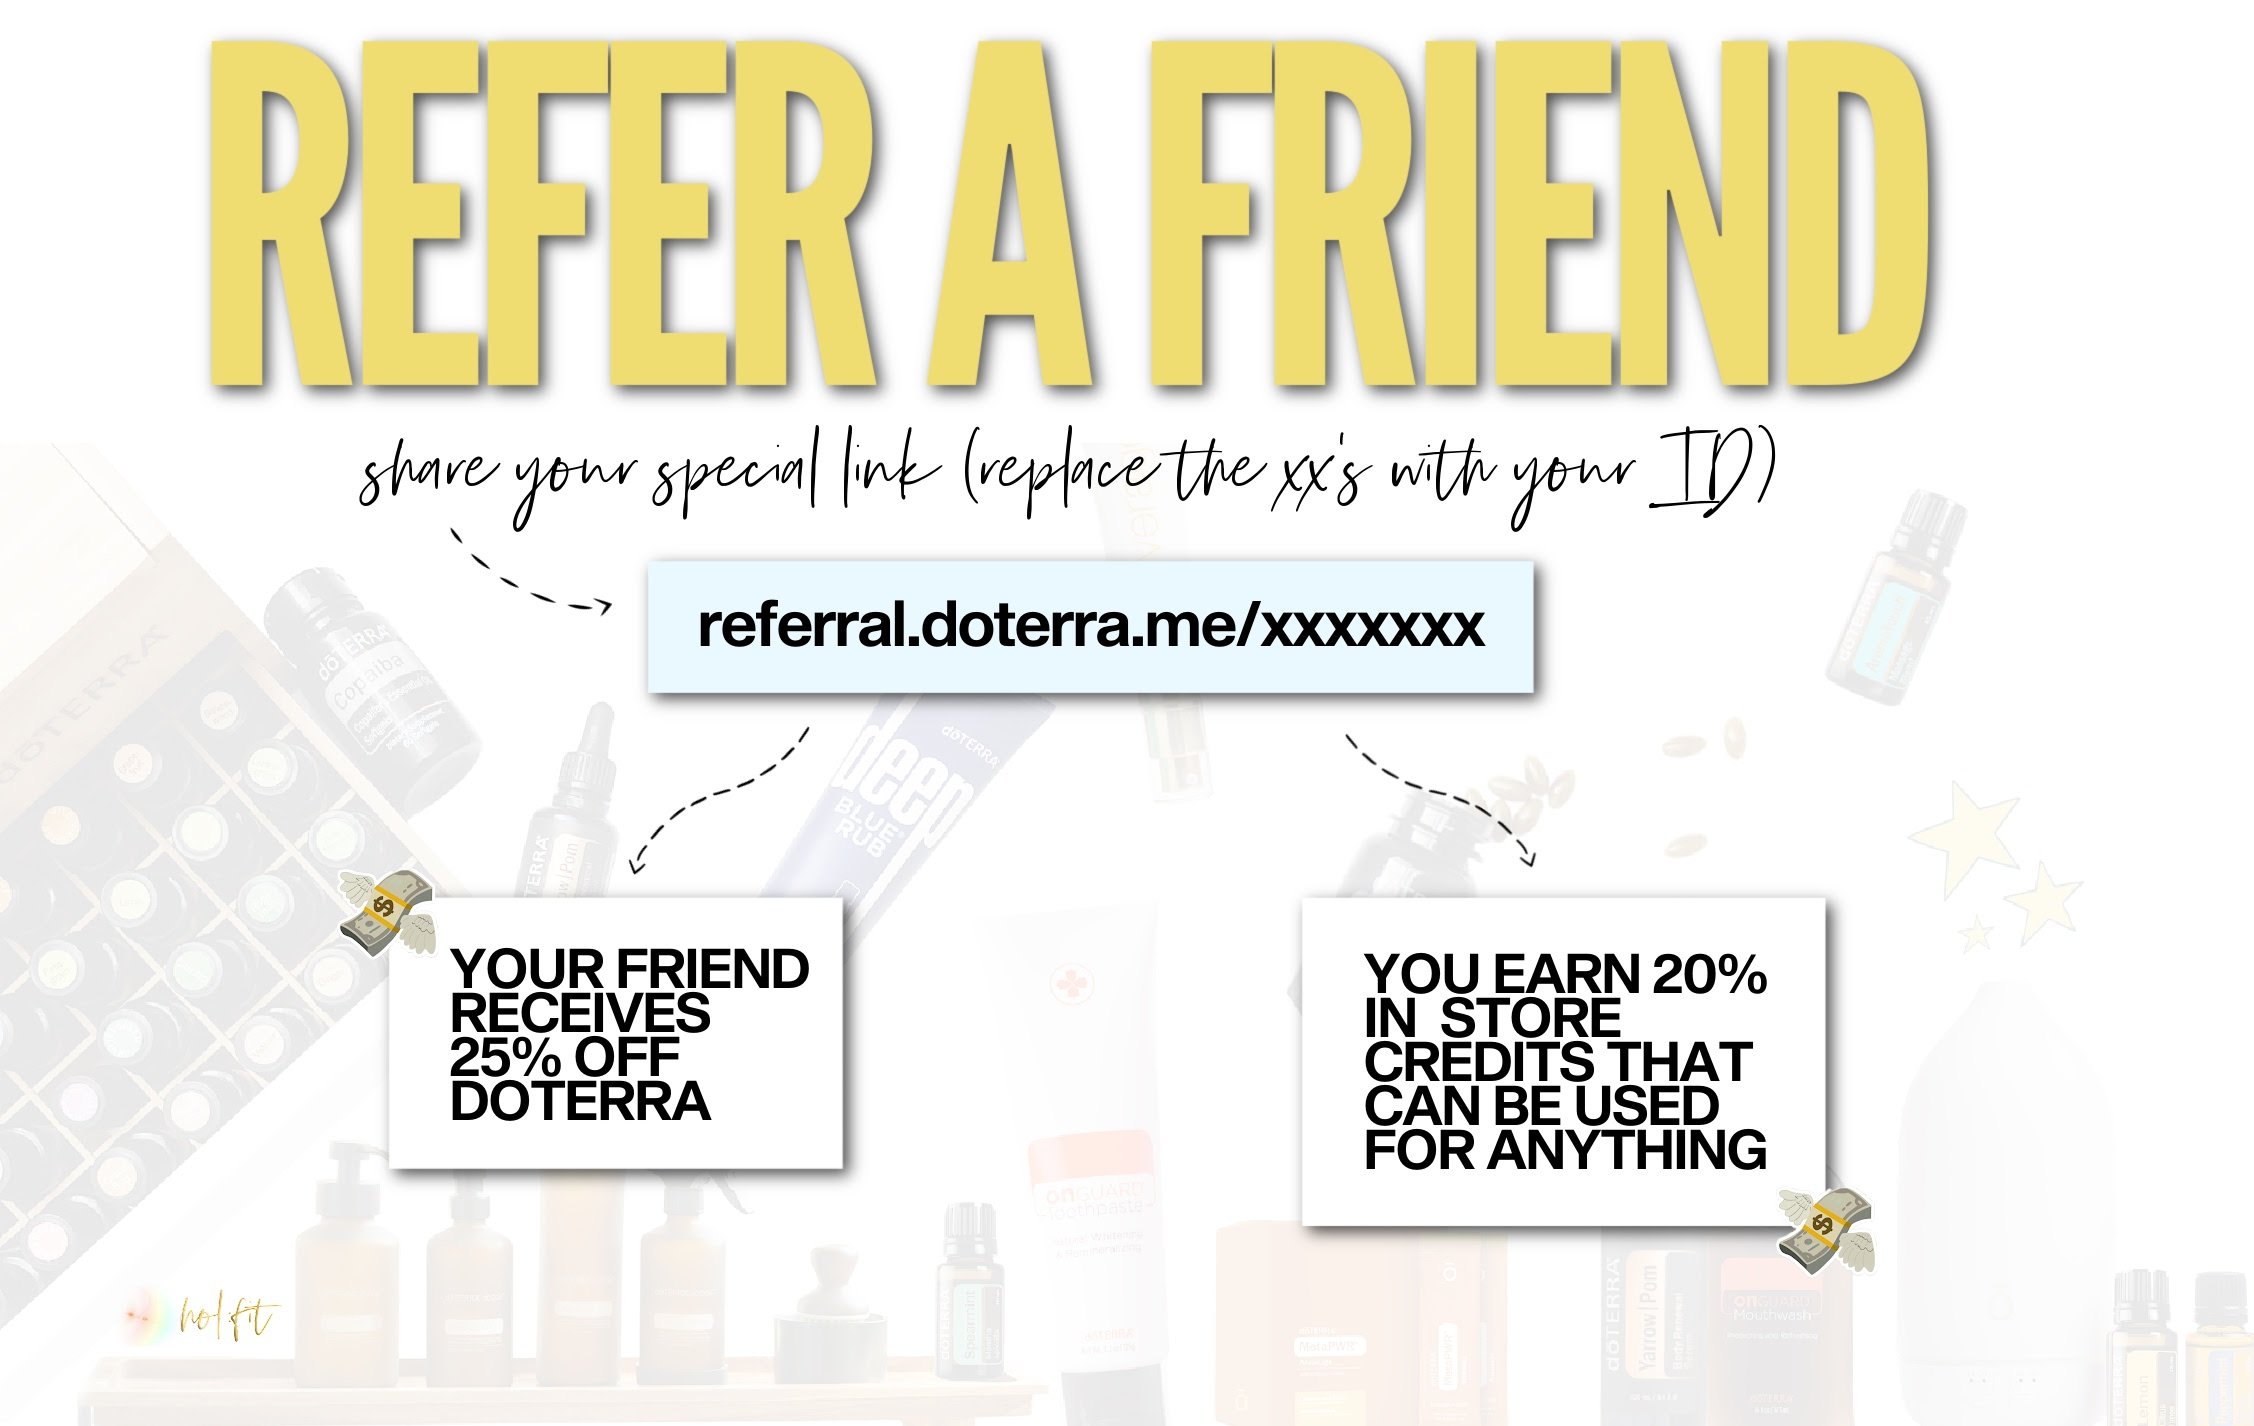 refer a friend.jpg